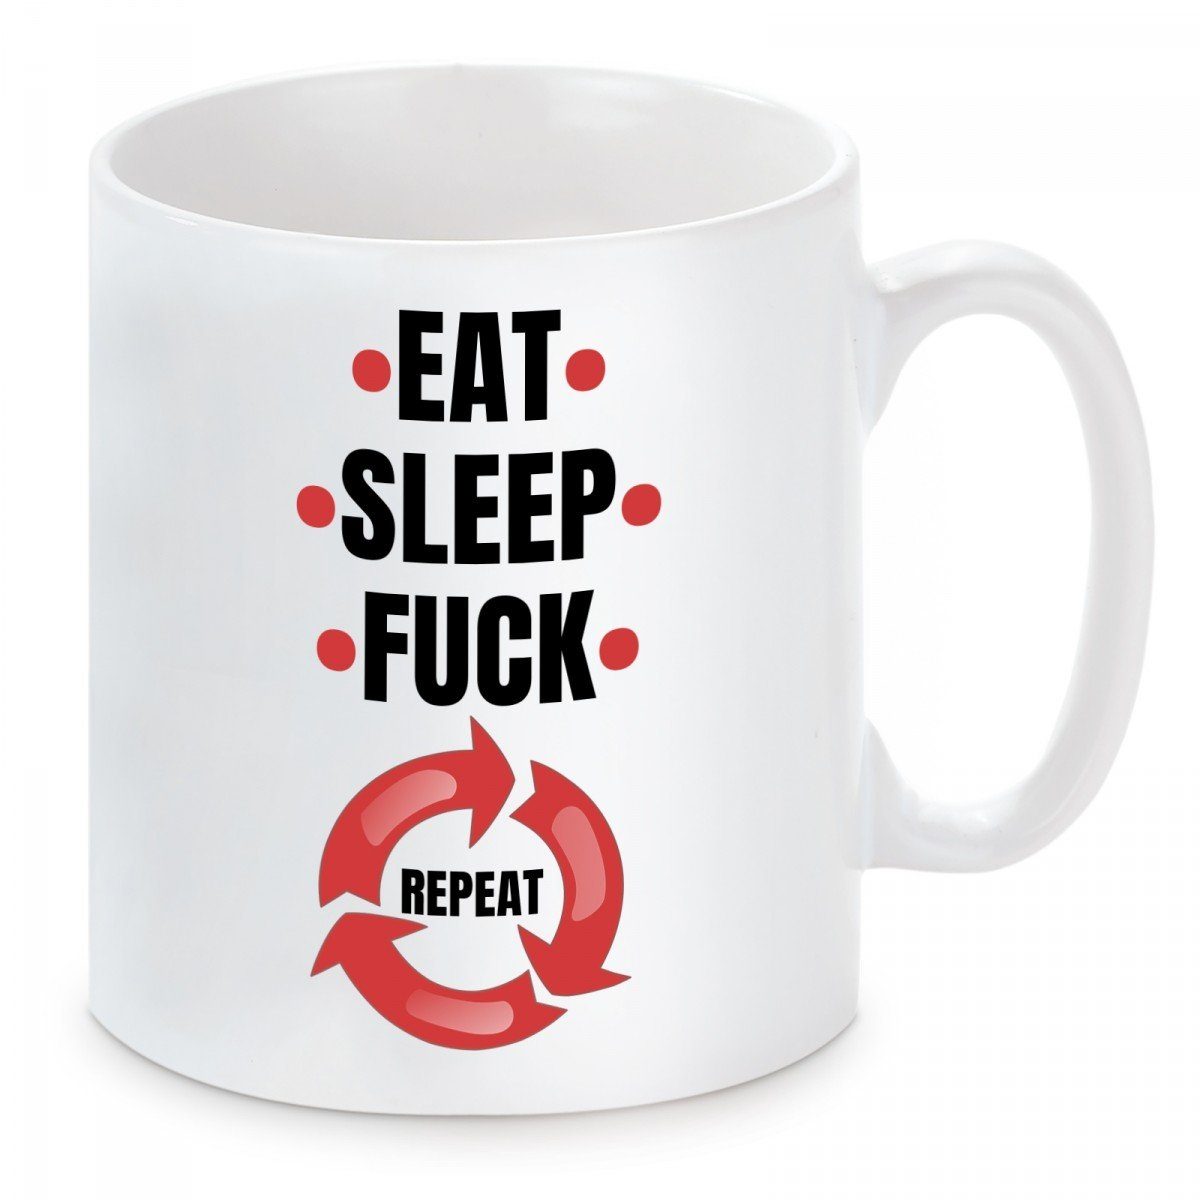 Motiv fuck, Eat, repeat, mikrowellengeeignet mit und Kaffeetasse Kaffeebecher Tasse sleep, spülmaschinenfest Keramik, Herzbotschaft